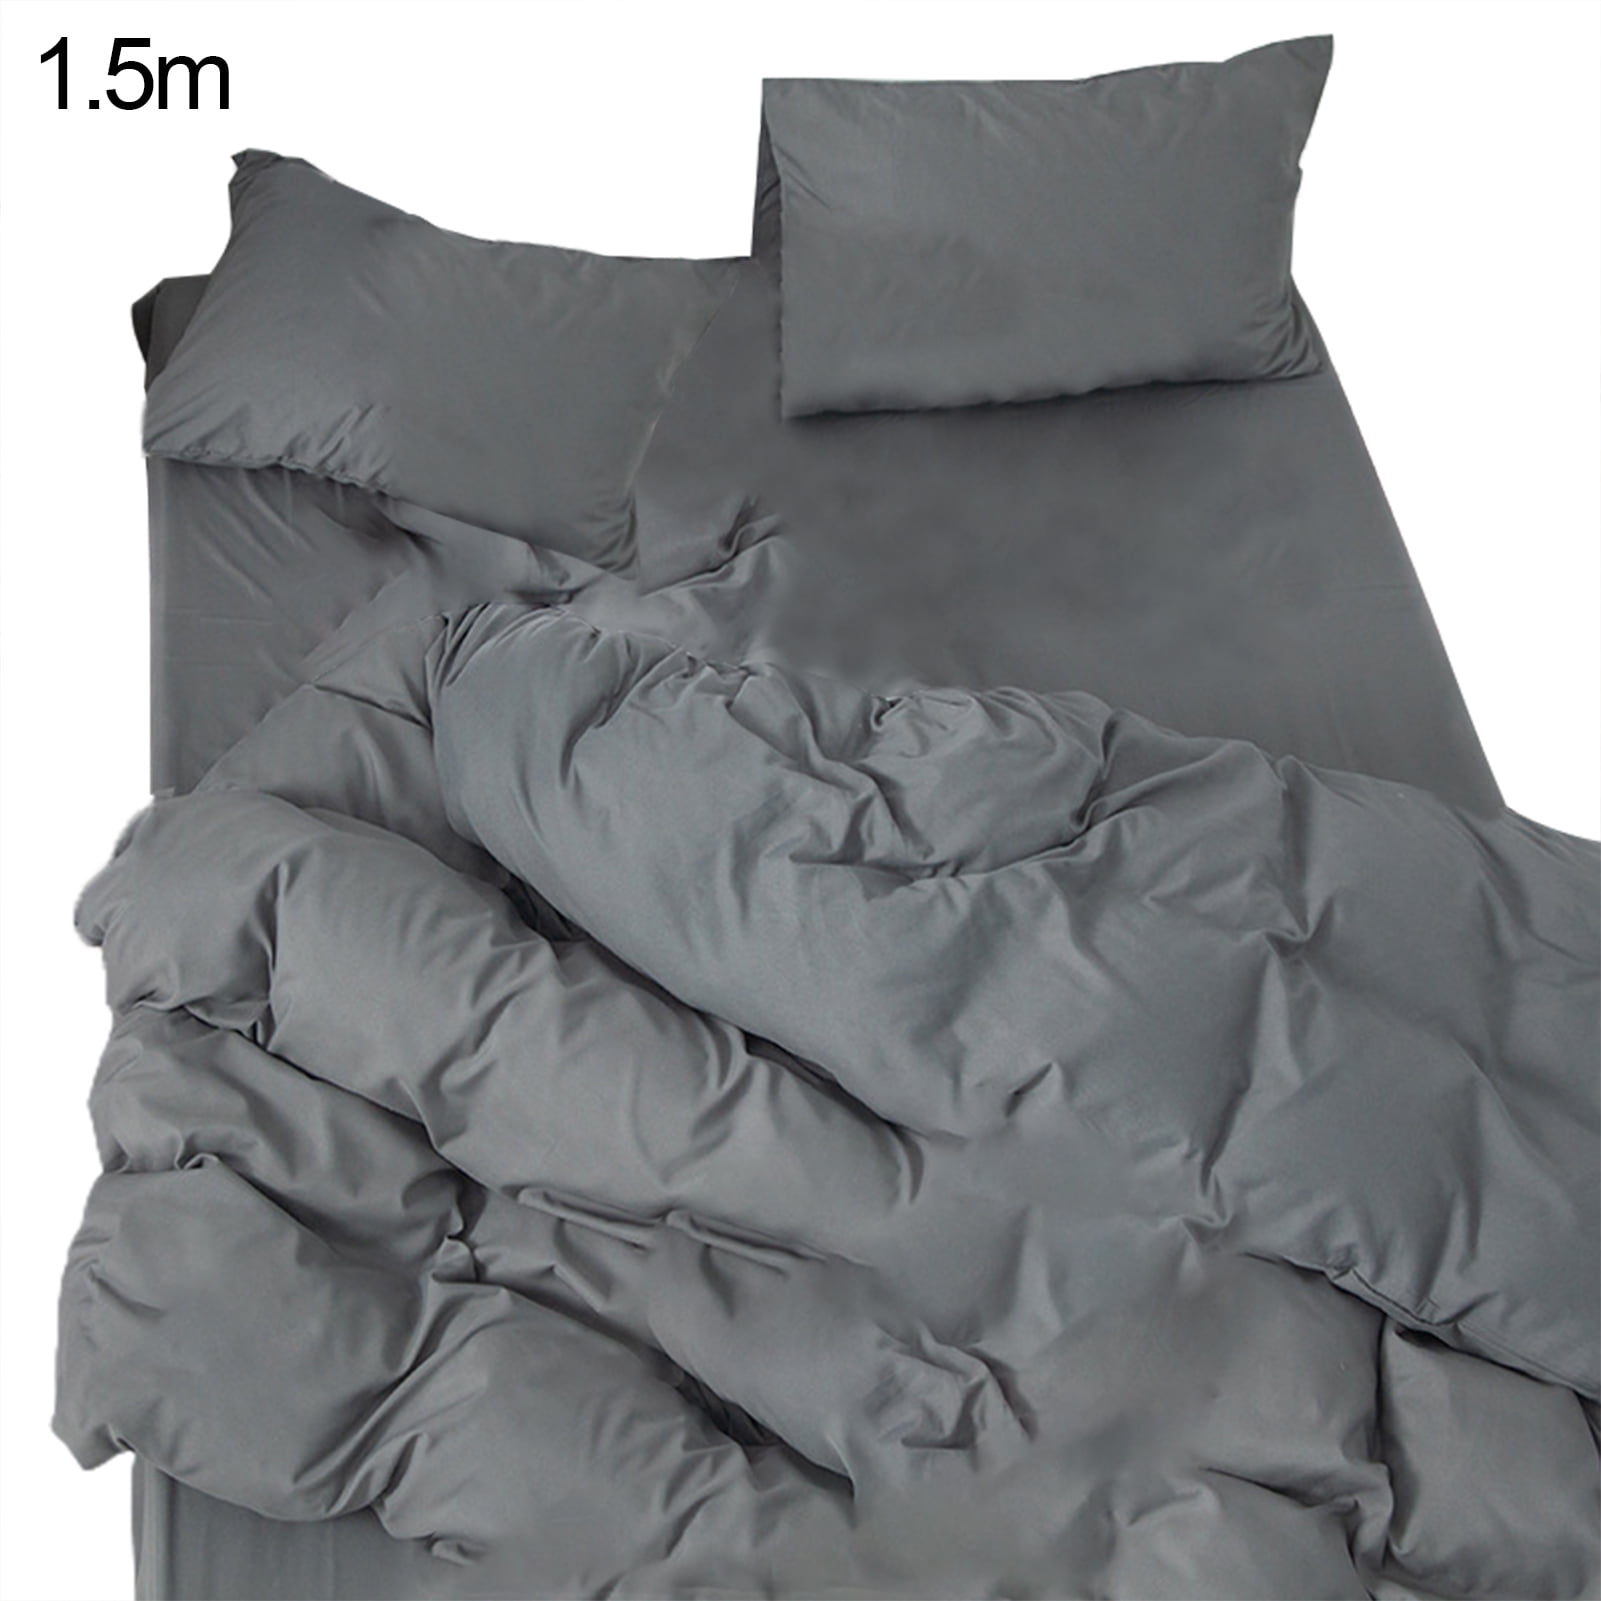 Details about   Bedding set 4pcs Silk cotton embroidery duvet cover flat sheet 2 pillowcases set 